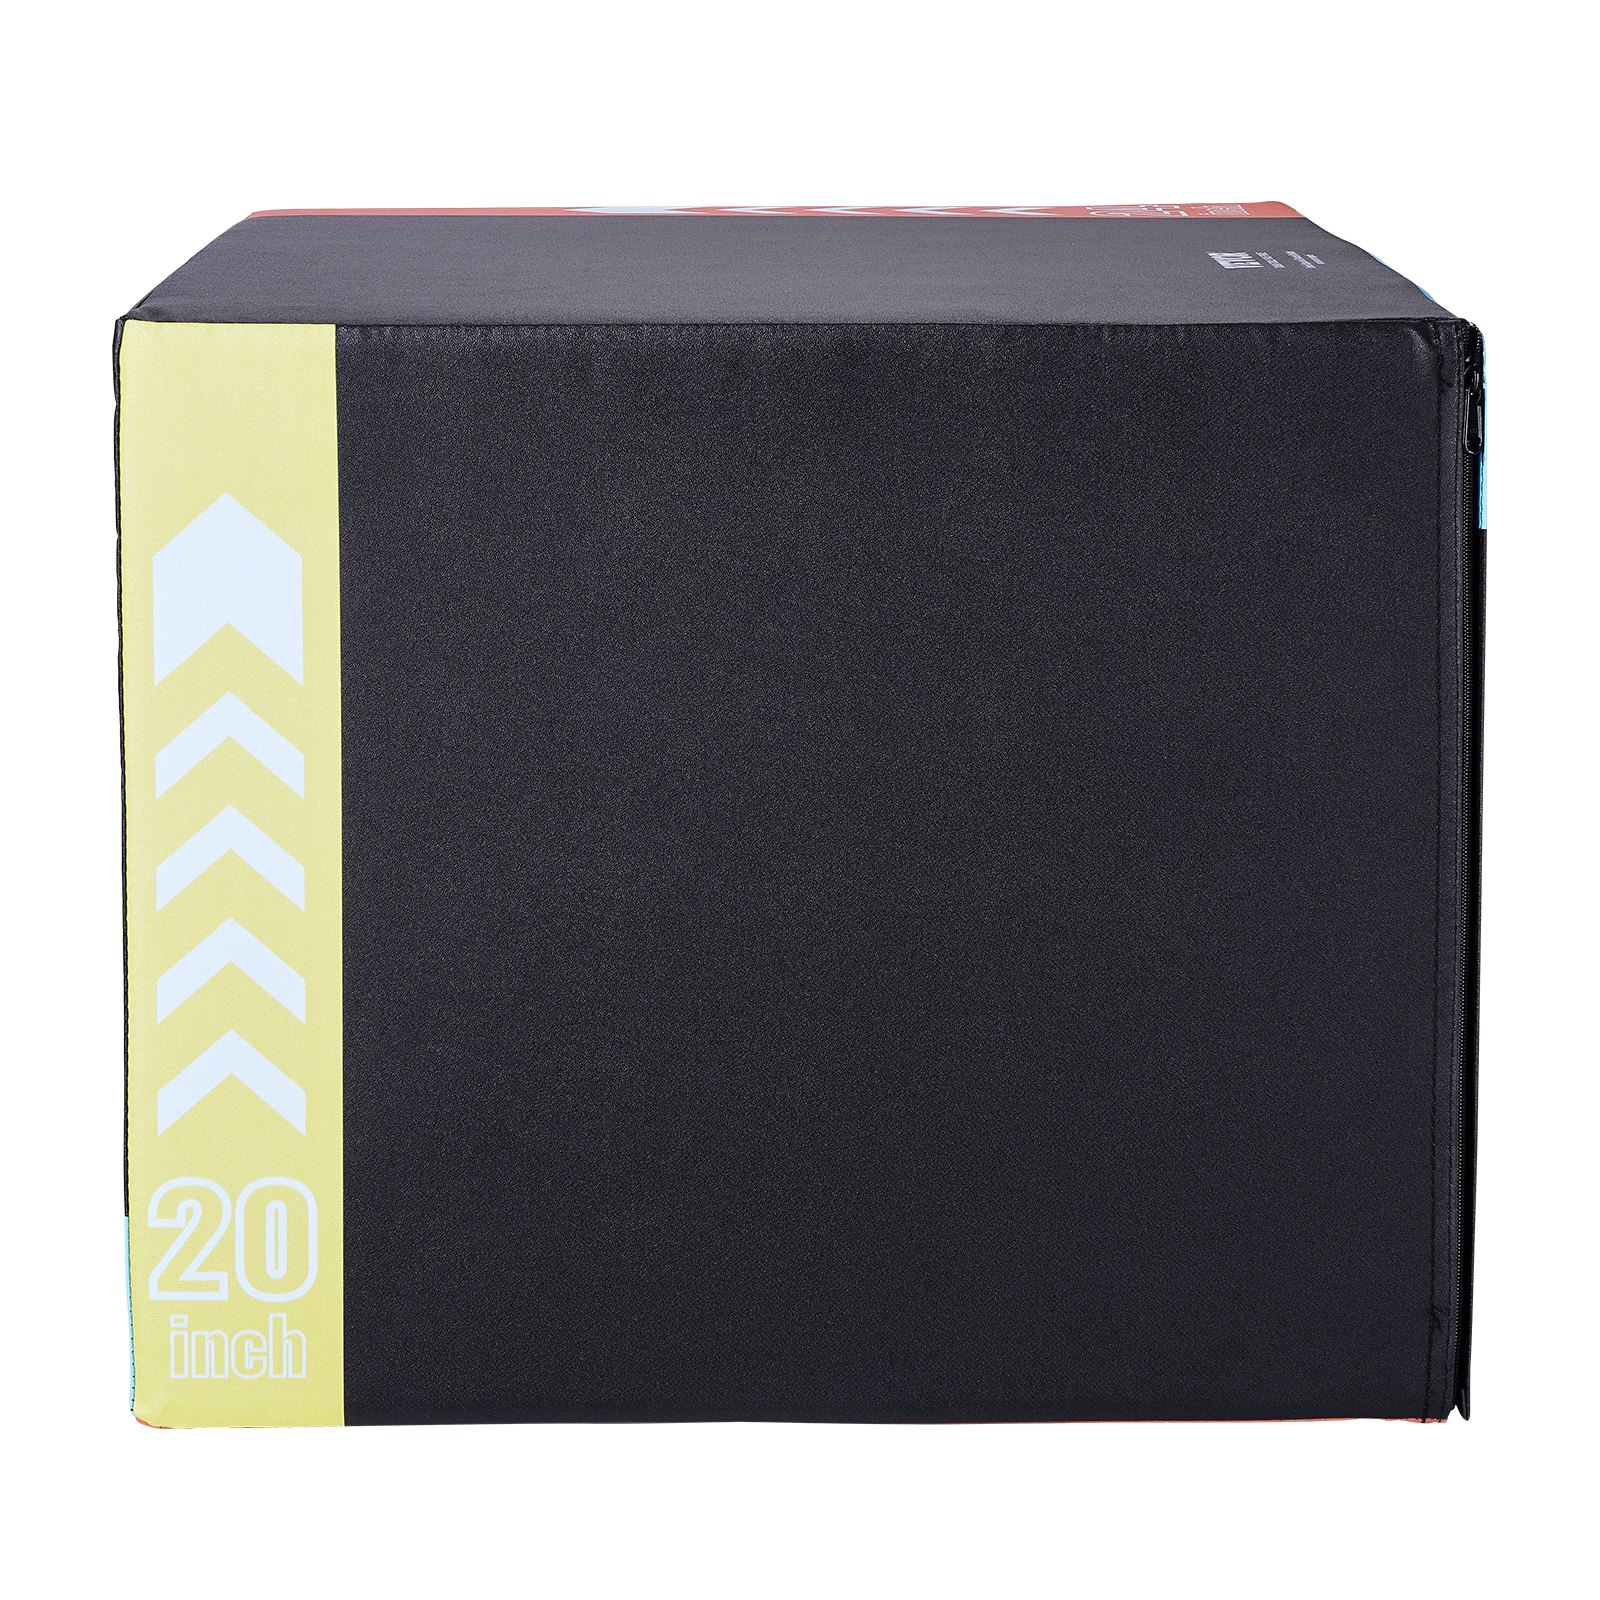 VEVOR 3 in 1 Plyometric Jump Box, 30/24/20 Inch Cotton Plyo Box, Goodies N Stuff